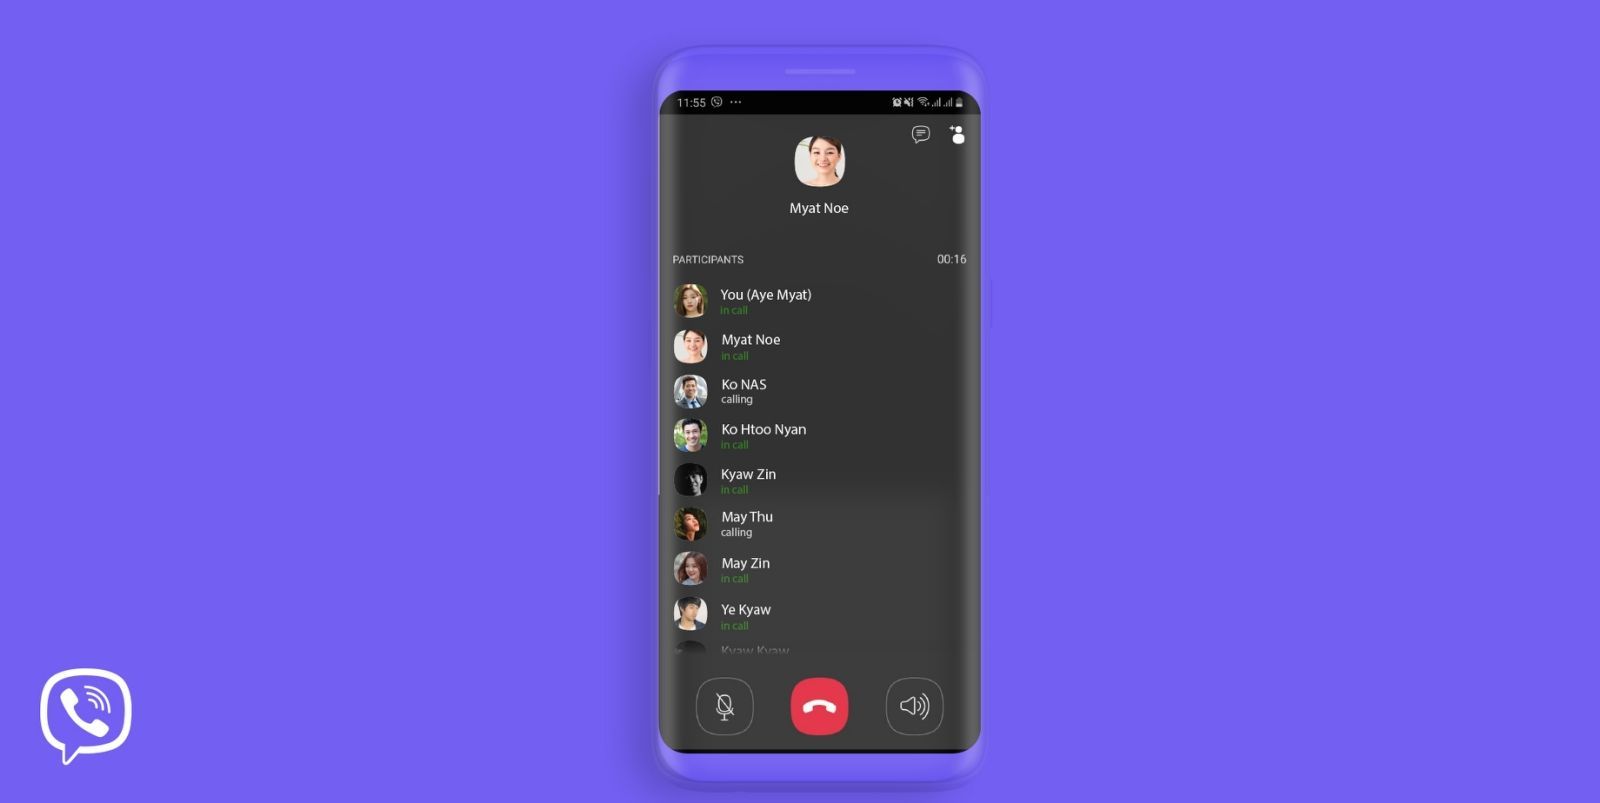 Rakuten Viber မှ ကိုရိုးနာဗိုင်းရက်စ်ဖြစ်ပွားချိန်အတွင်း အလွယ်တကူ ချိတ်ဆက်အသုံးပြုနိုင်စေရန် ၎င်းတို့၏ Group Call ပါဝင်နိုင်သူဦးရေအားတိုးမြင့်